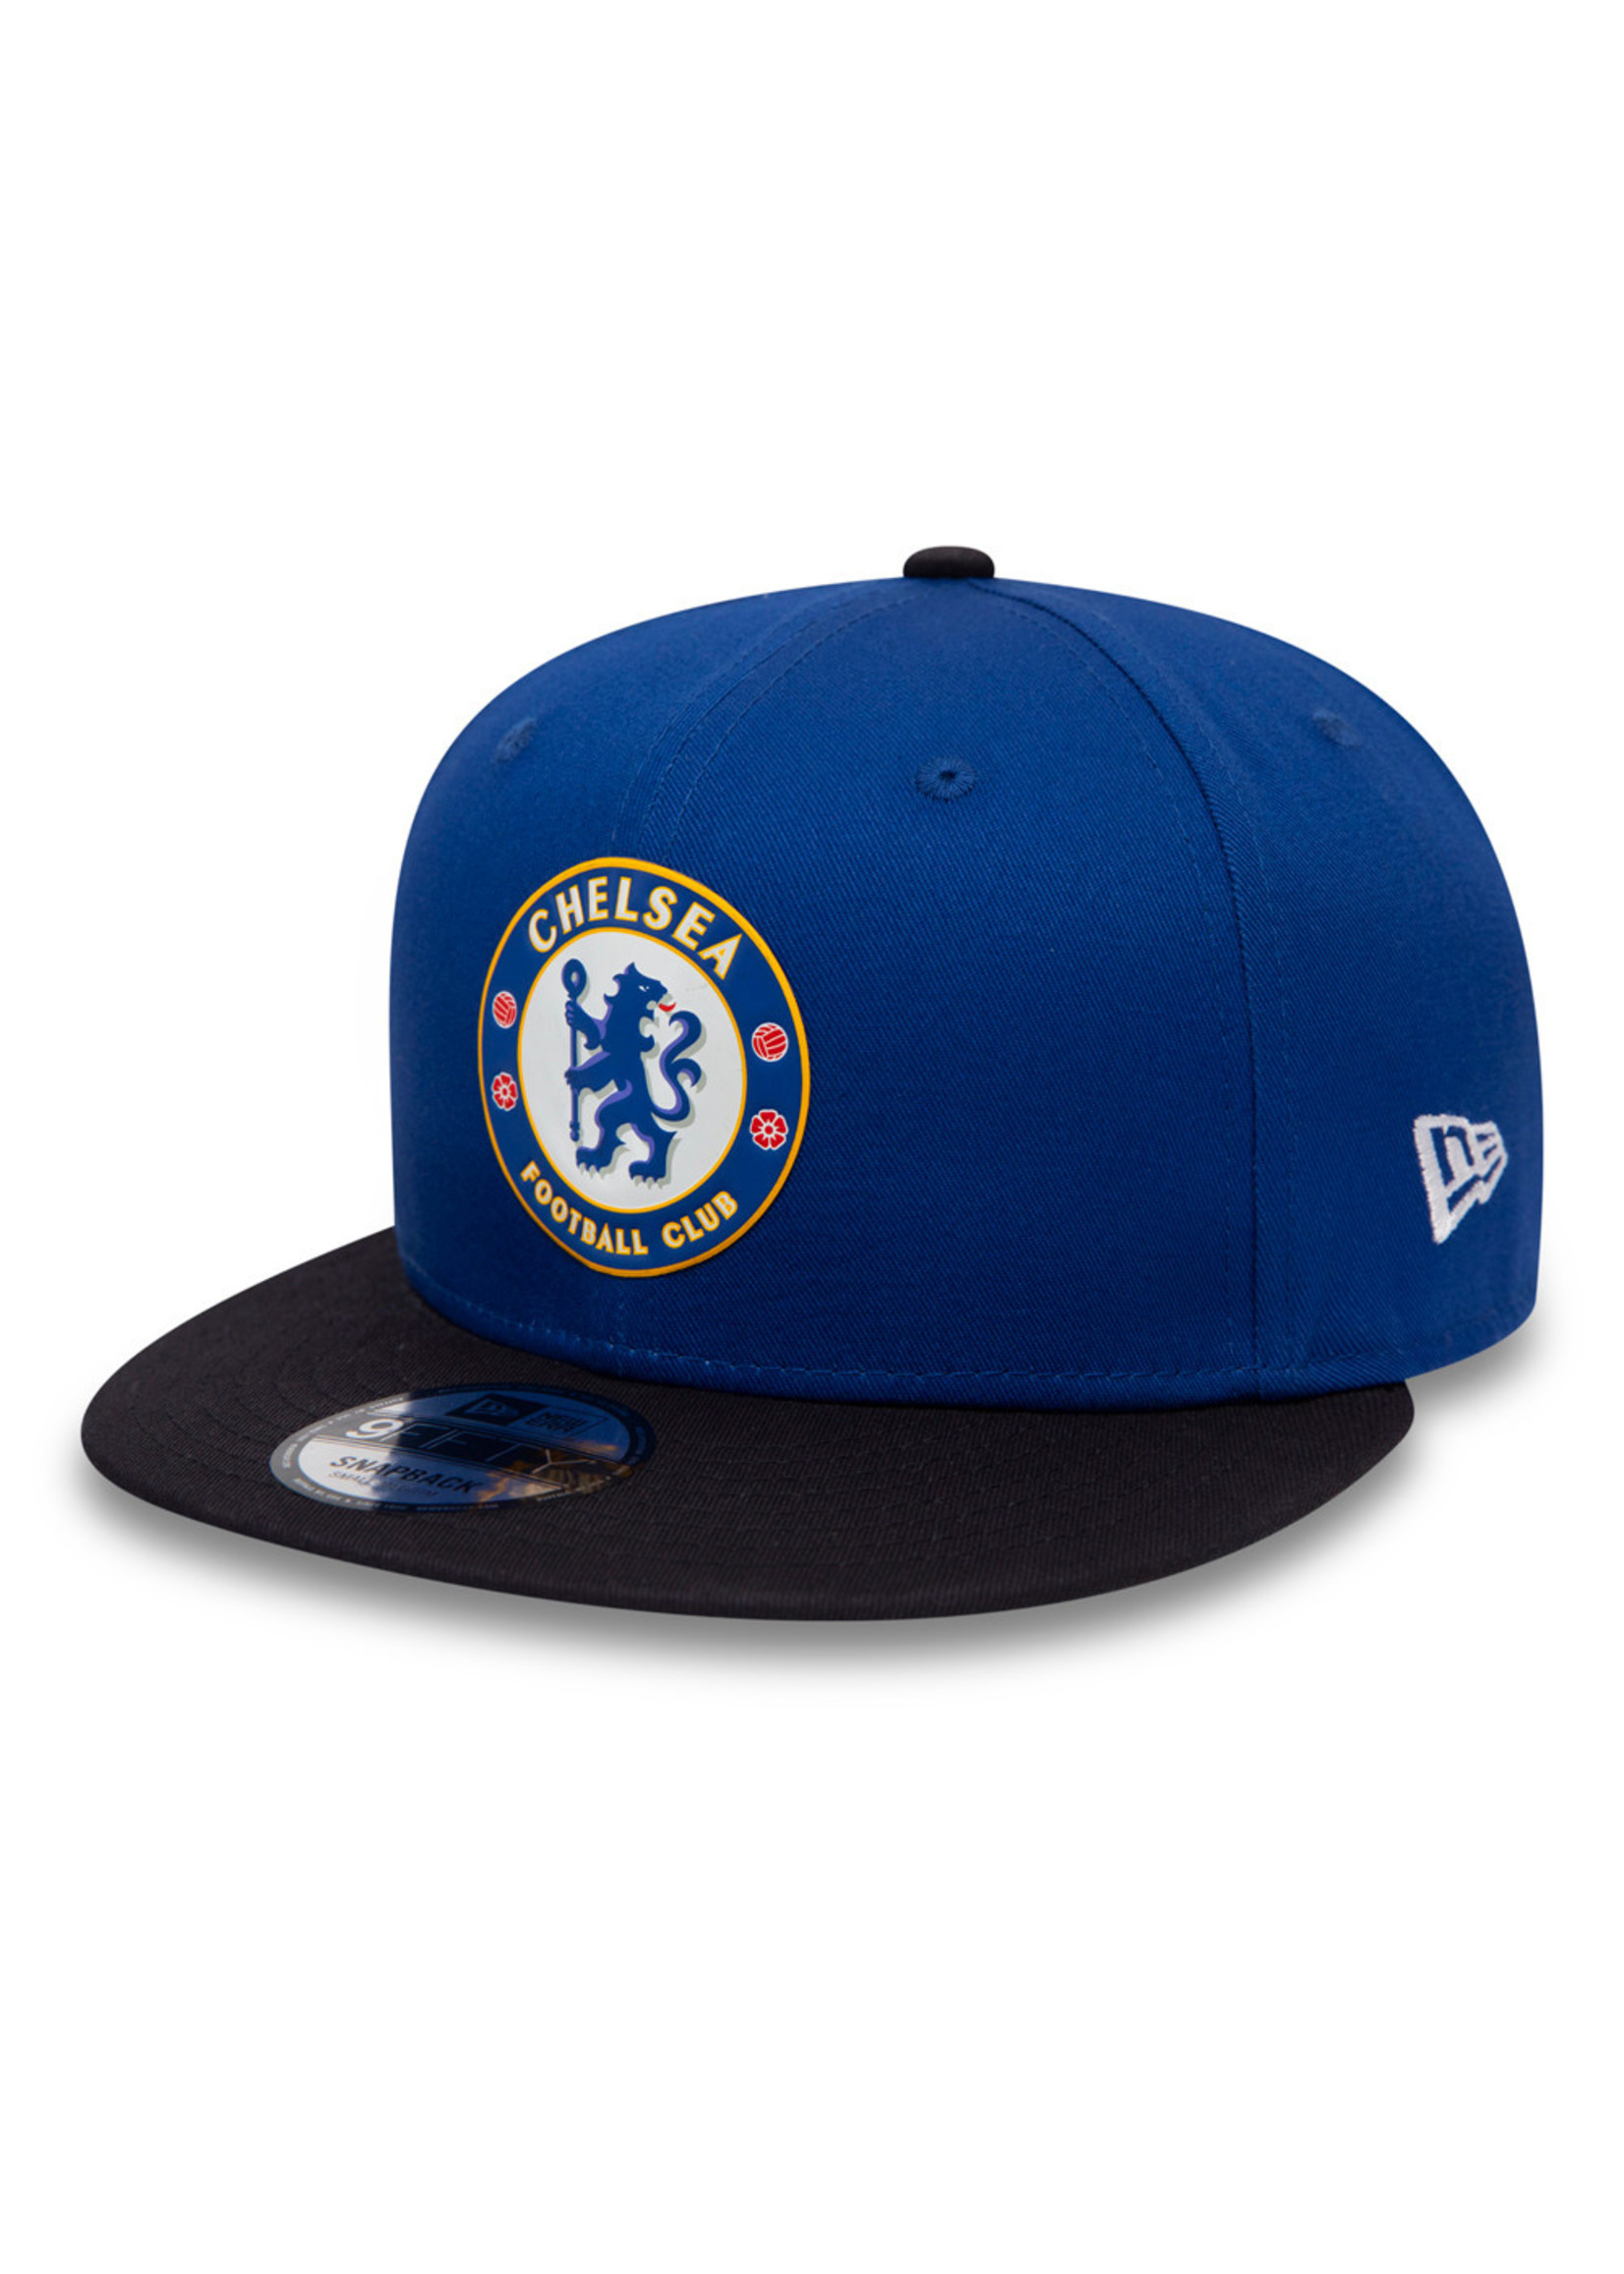 New Era Chelsea 9Fifty Snapback Cap